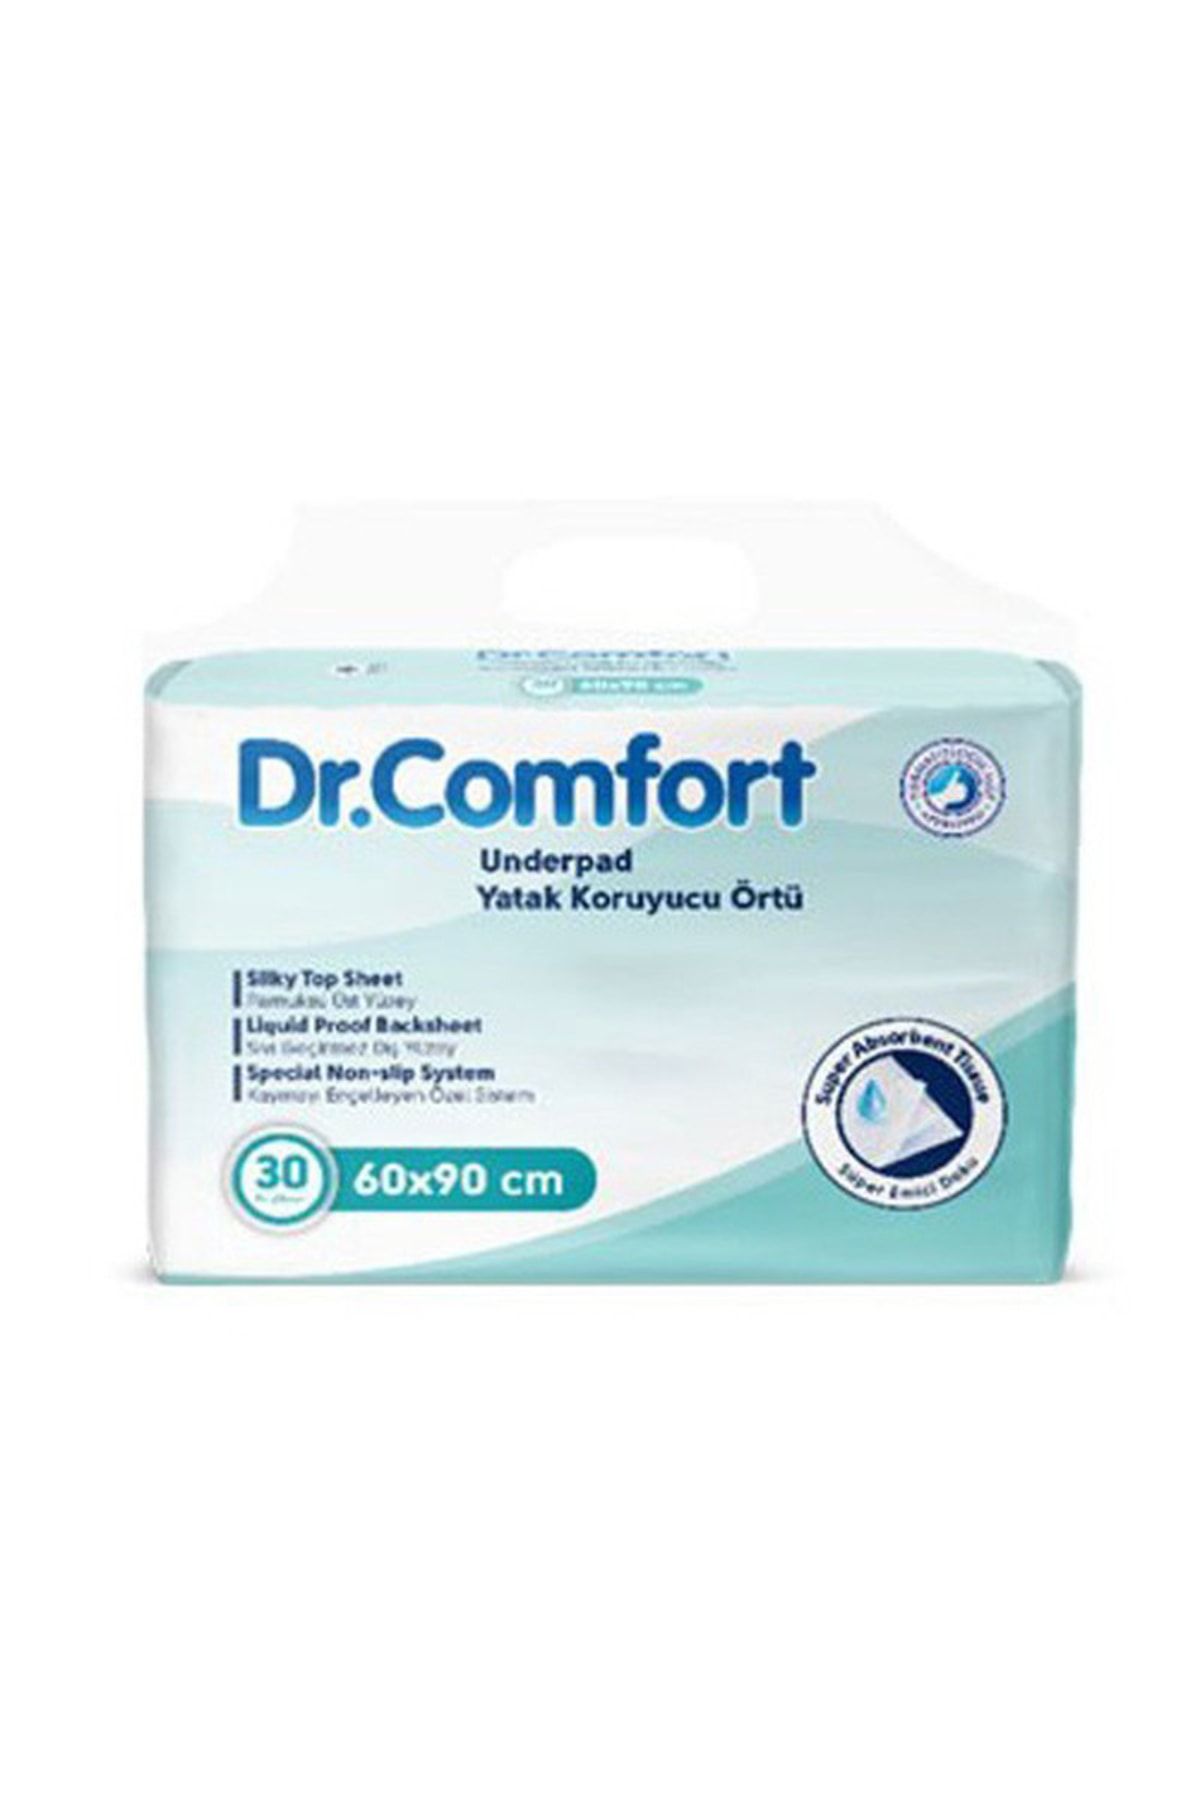 Dr.Comfort Yatak Koruyucu Ped 60x90 30luk Dr. Comfort